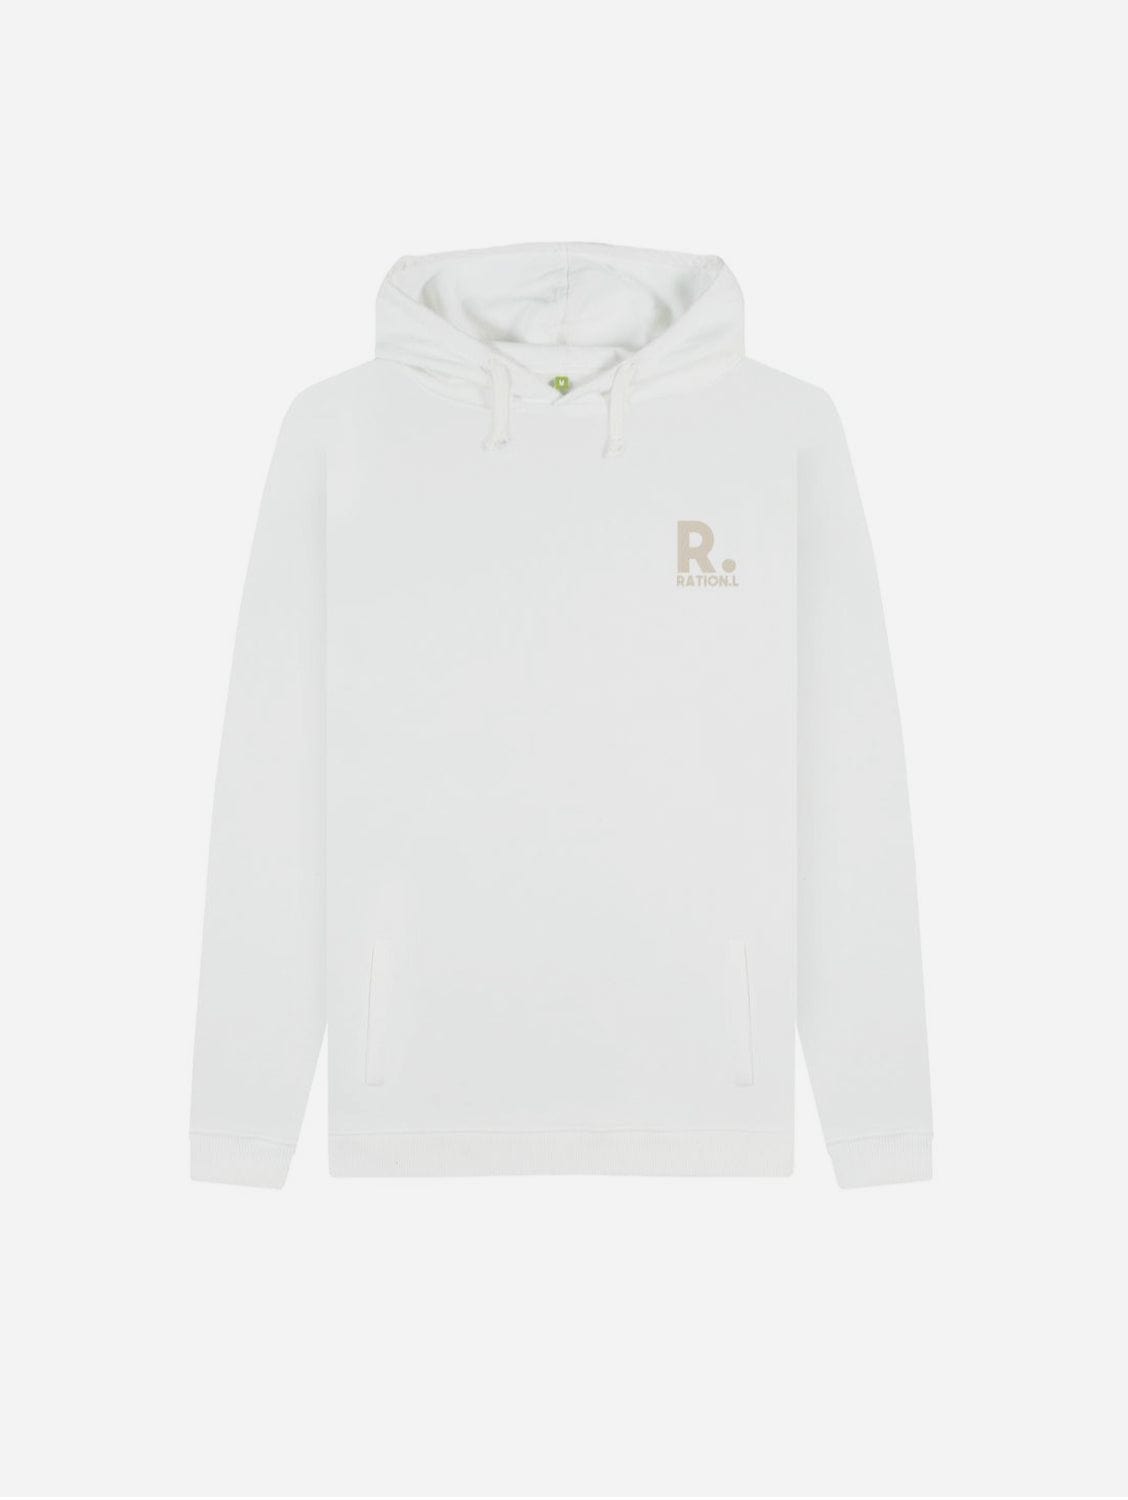 Ration.L R Kind Organic Hoodie - White (Refurbished)